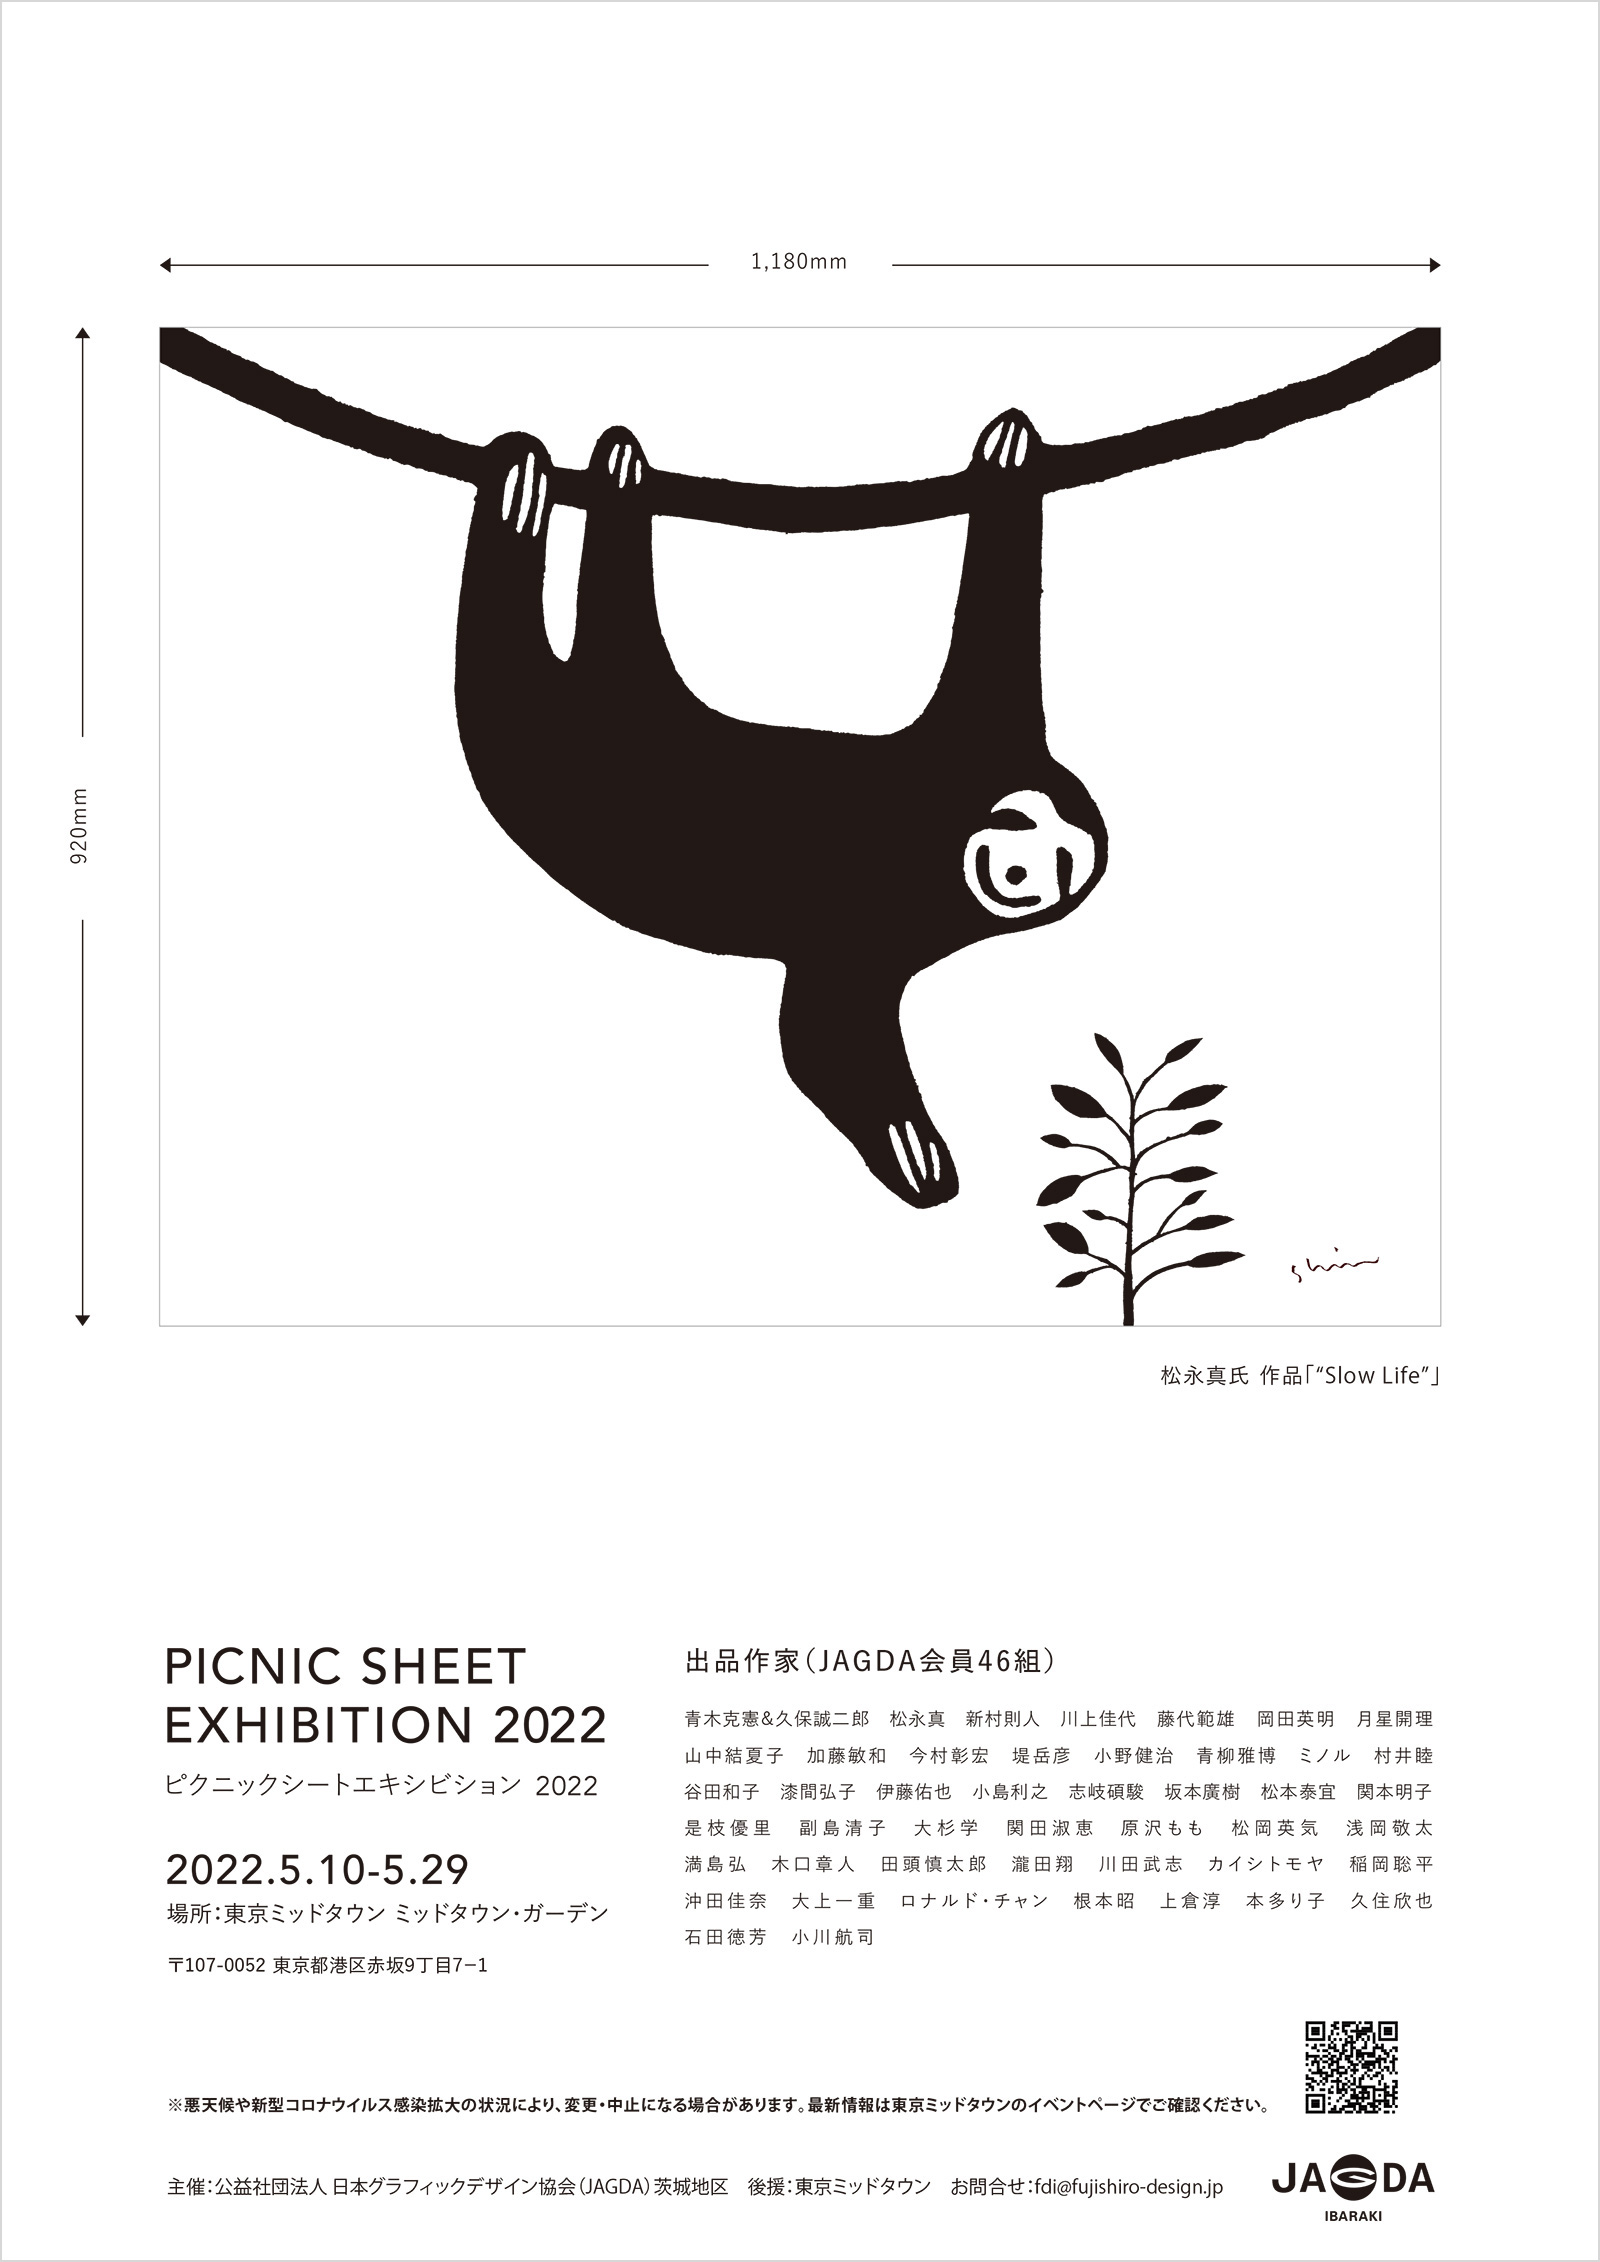 PICNIC SHEET EXHIBITION 2022【JAGDA茨城地区】